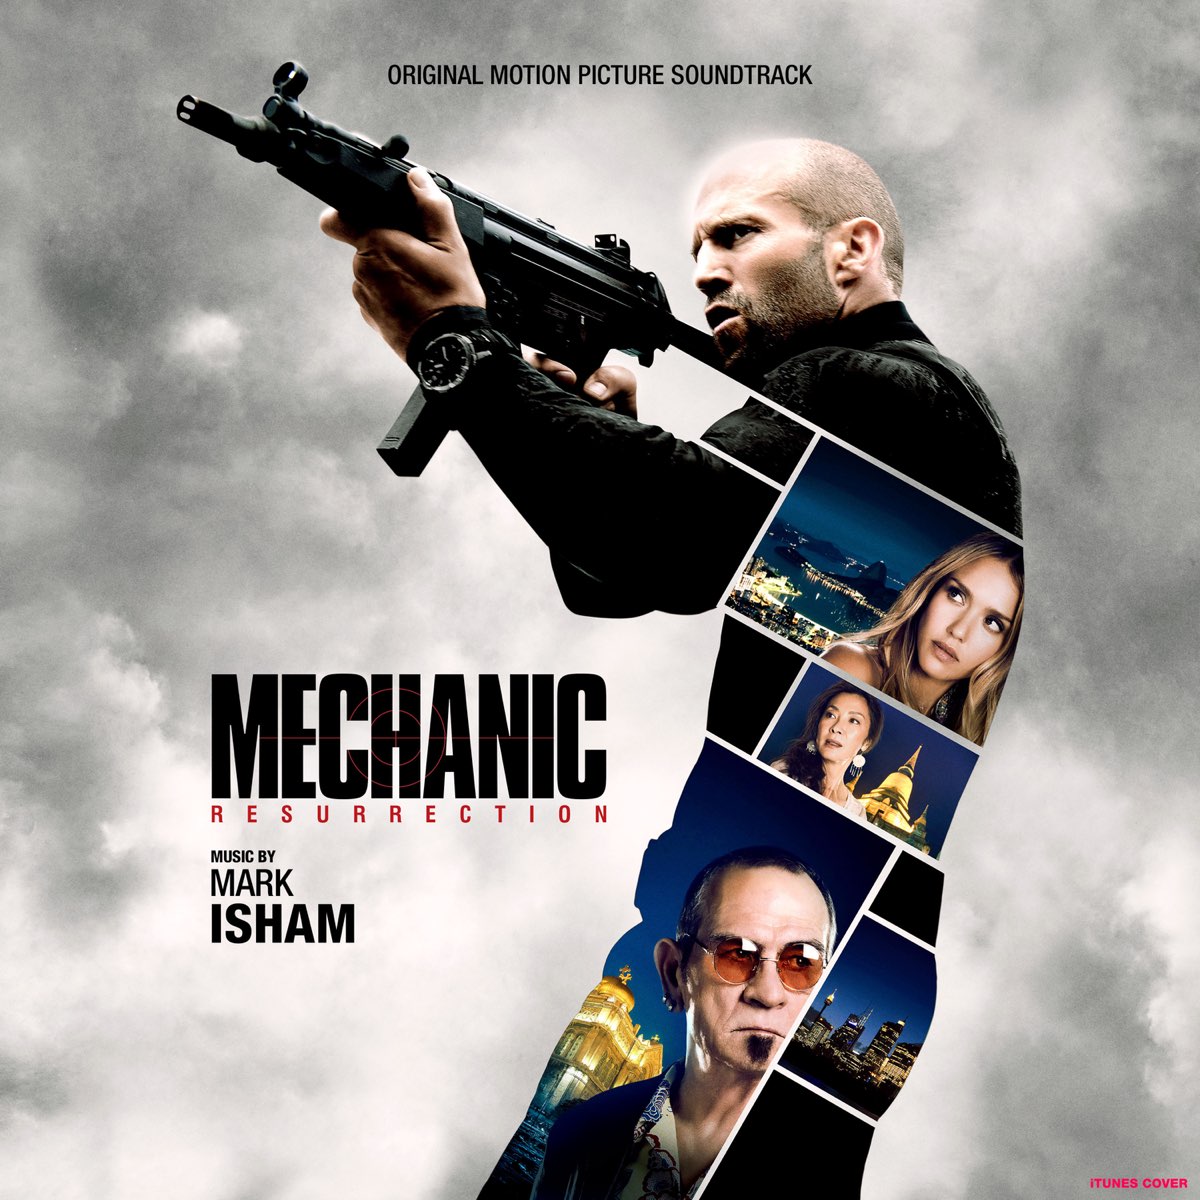 Mechanic: Resurrection (Original Motion Picture Soundtrack) by Mark Isham  on Apple Music